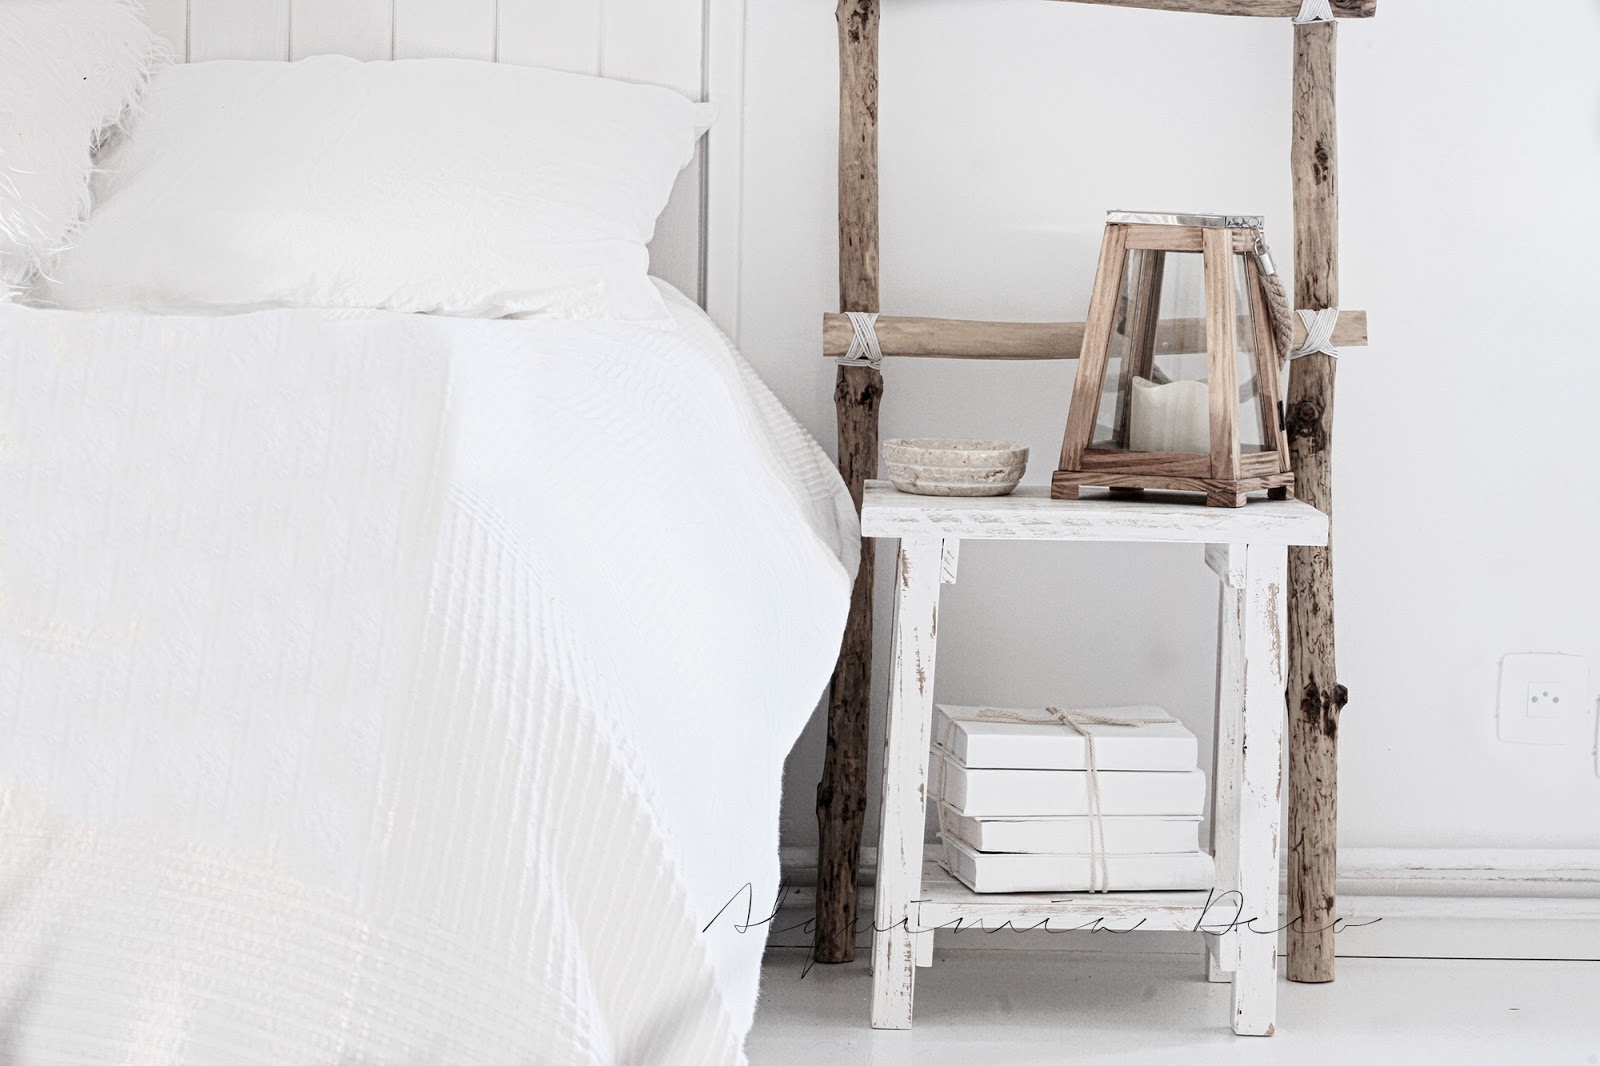 dormitorio blanco estilo nordico decoracion nordica bedroom white nordic style interiorismo barcelona interiorista mesita noche